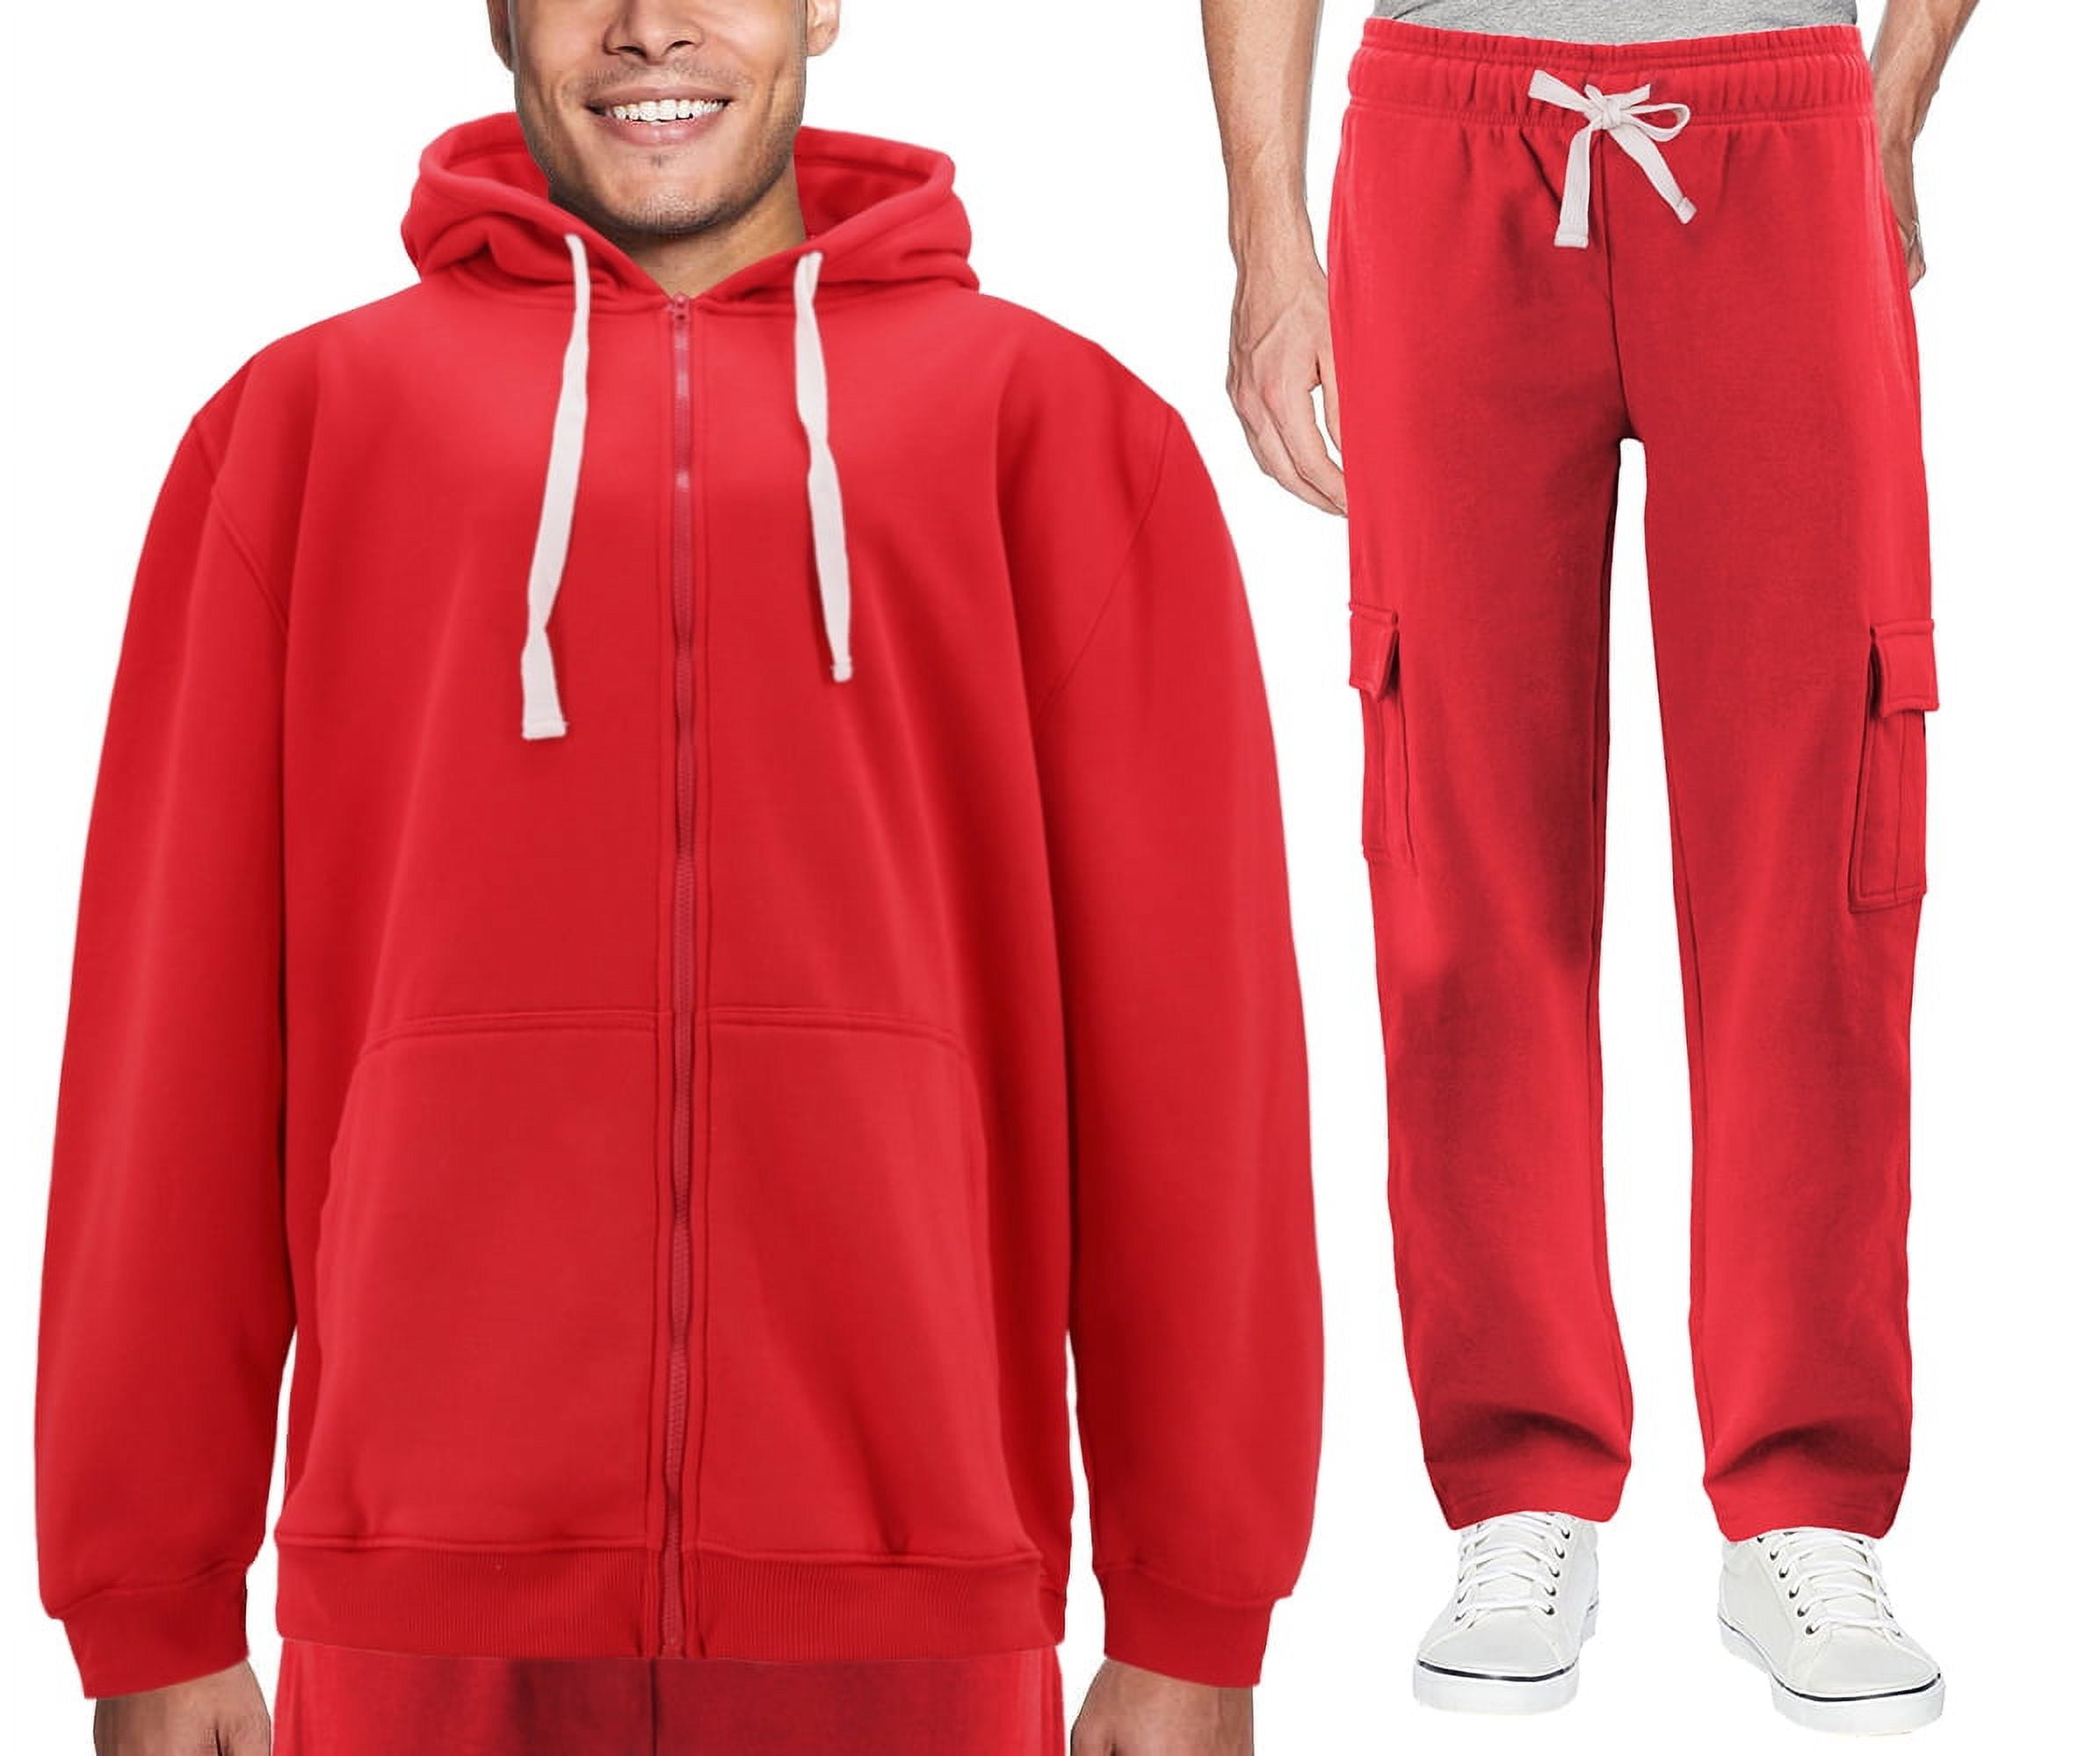 Men's Zip Up Fleece Sports Gym Athletic Jogging Track Sweat Suit 2